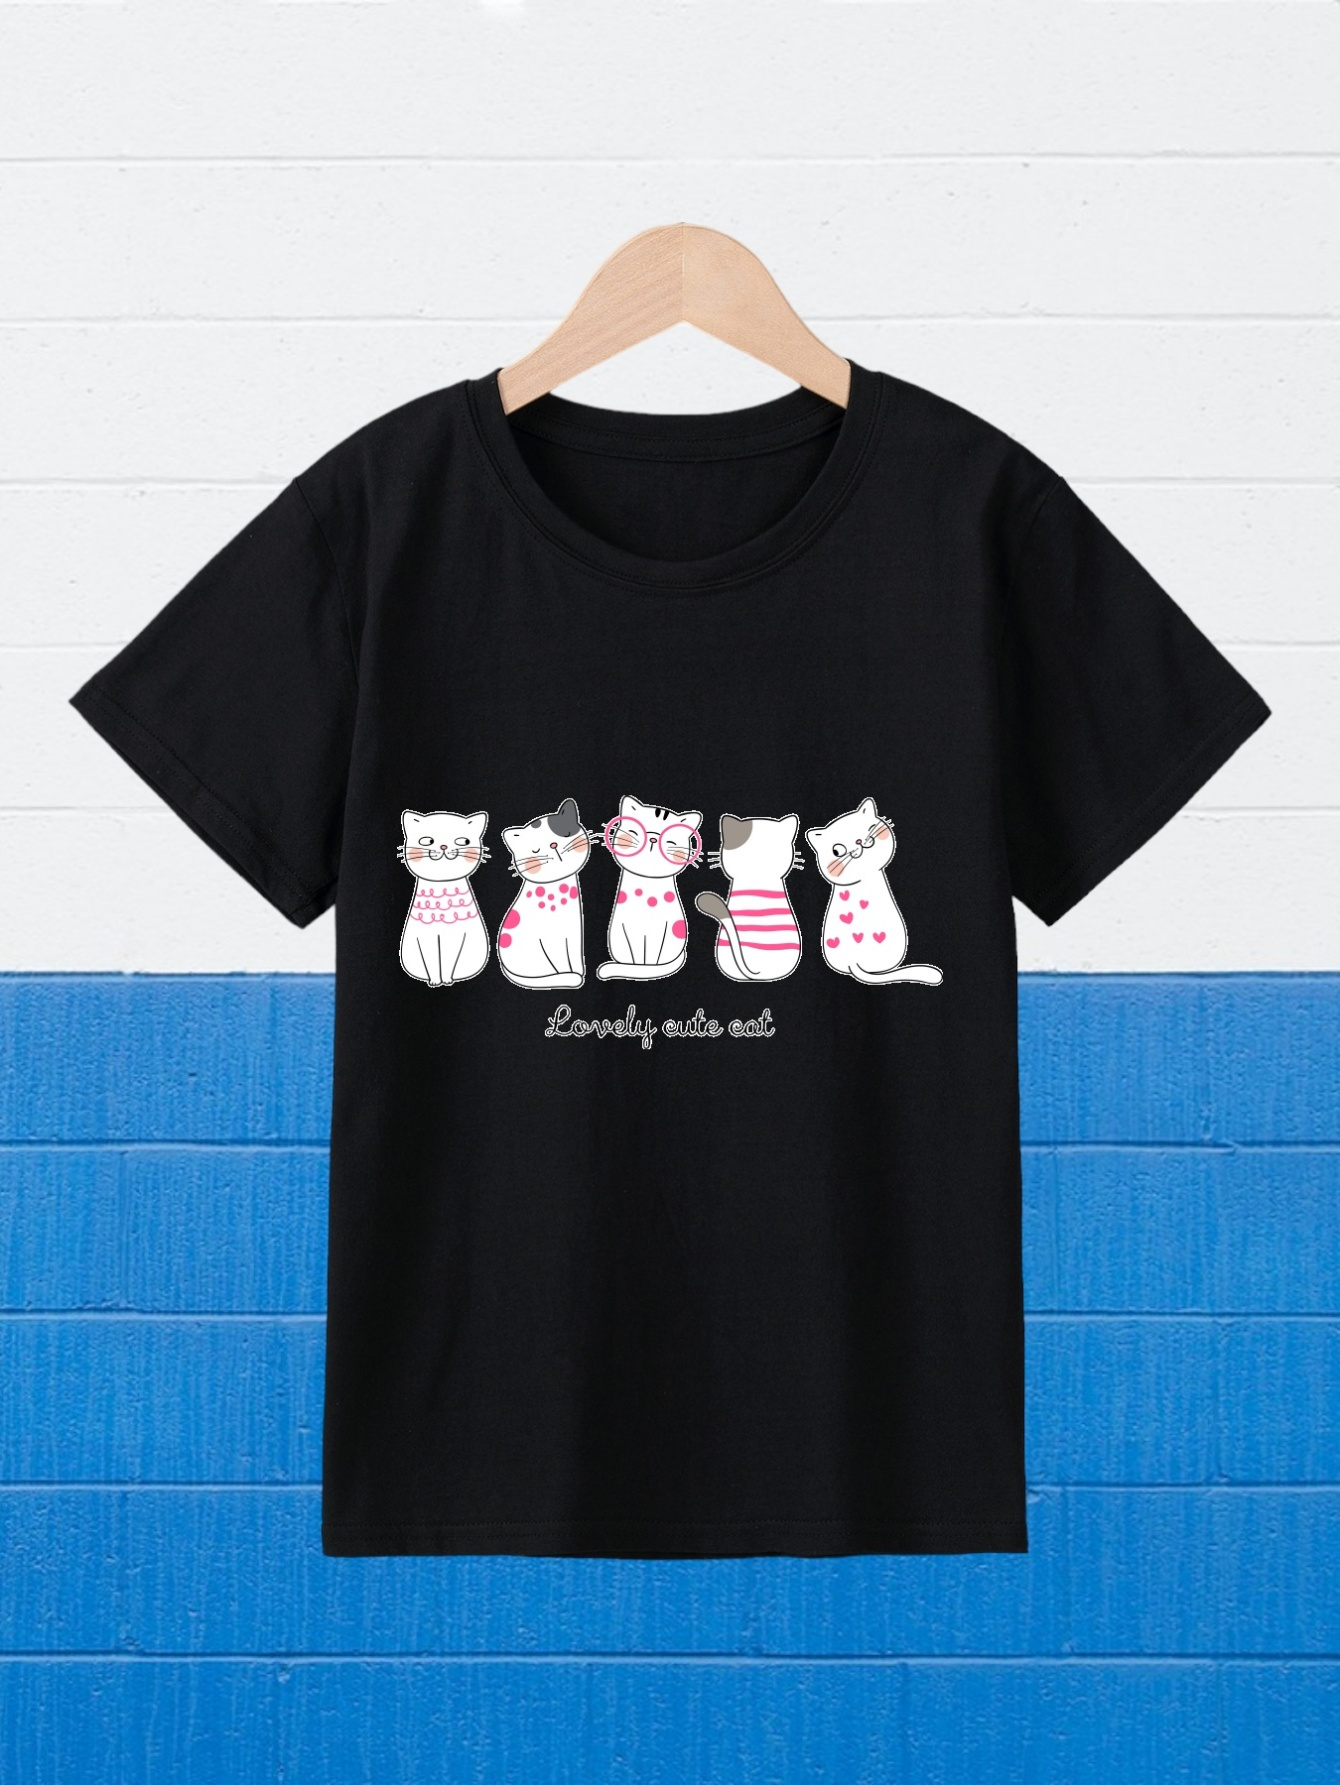 Camiseta deportiva transpirable de manga corta para mujer - Lovely